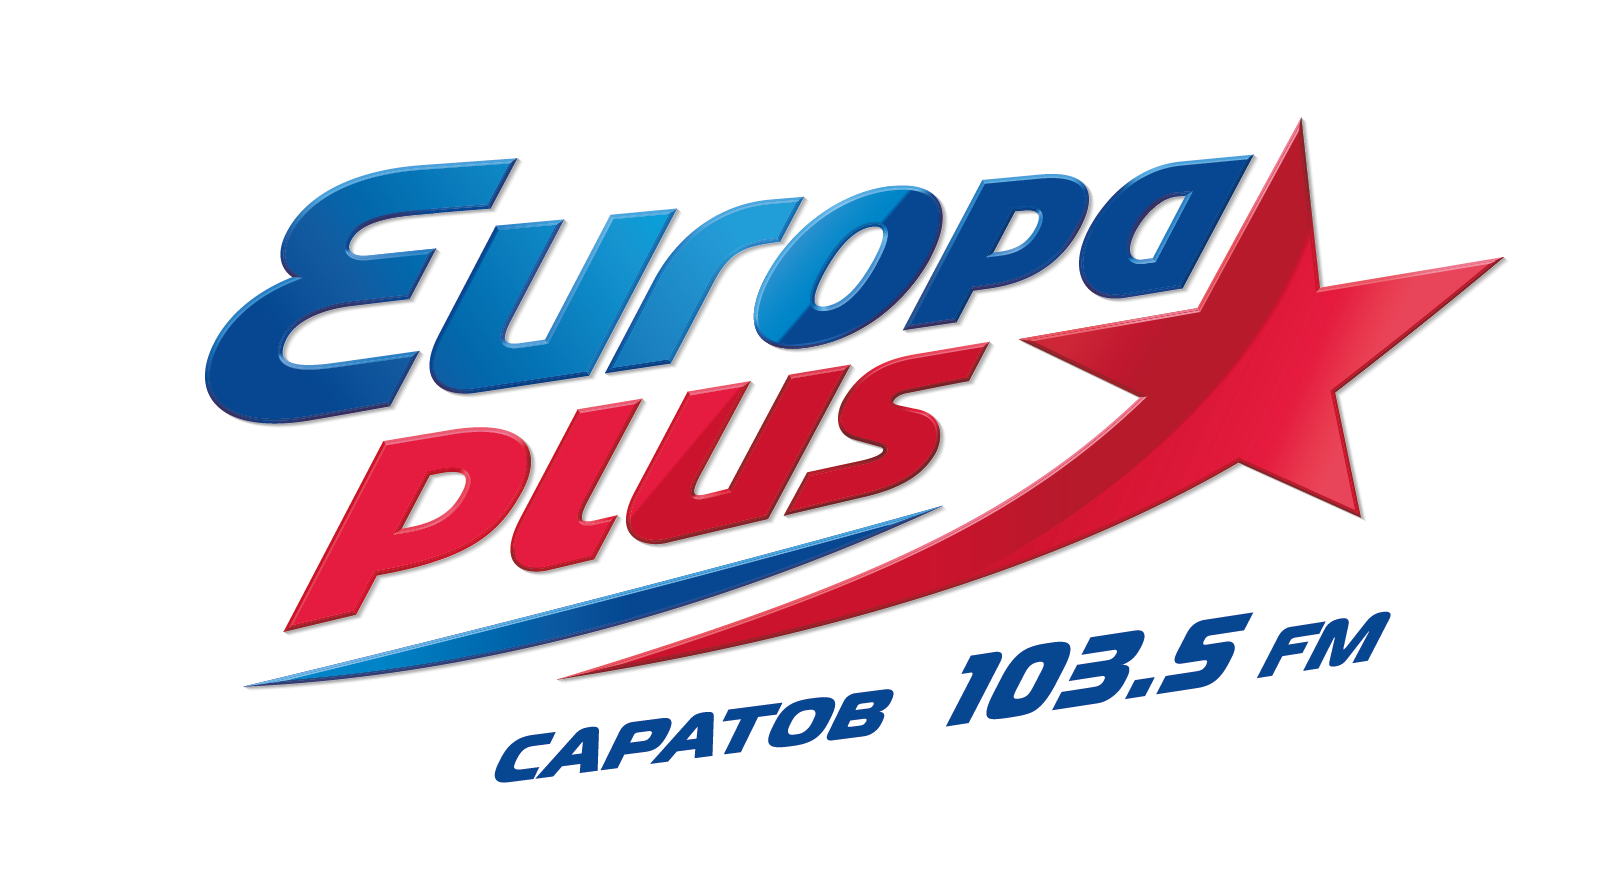 Фм радио европа плюс. Товарный знак Европа плюс. Радиостанция Европа плюс. Логотипы радиостанций. Логотип радиостанции Европа плюс.